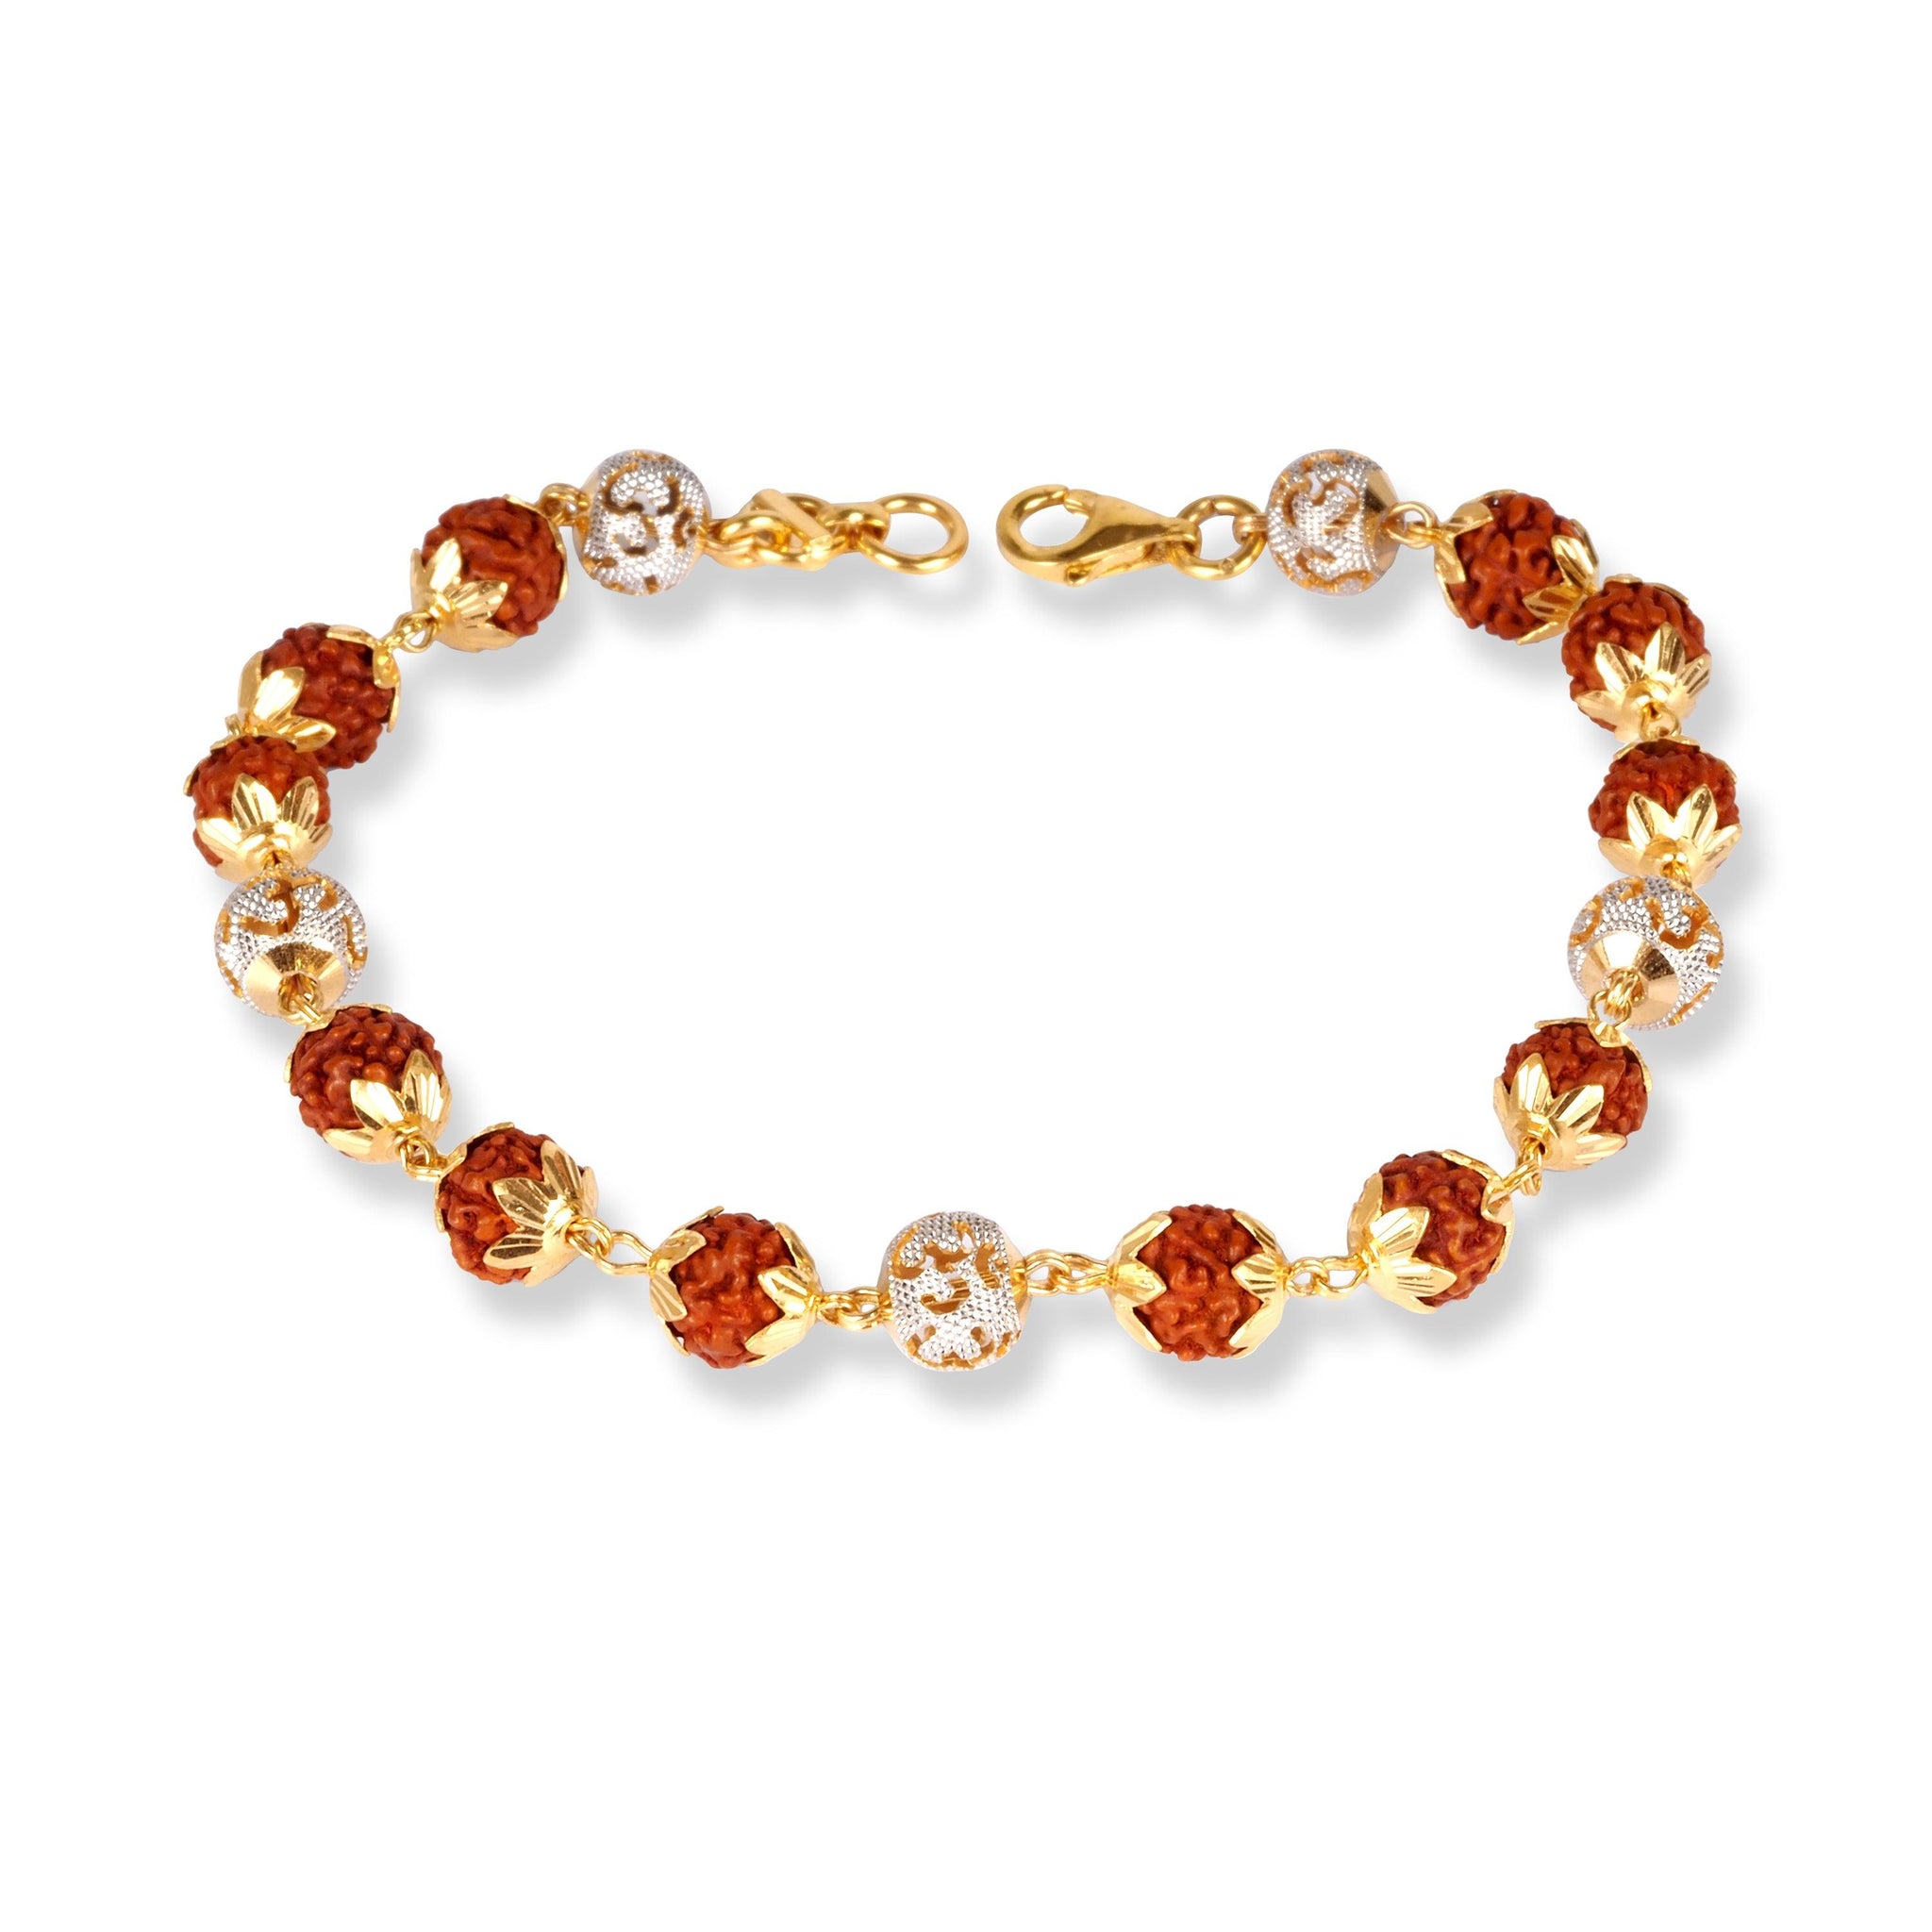 22ct Gold Rudraksh Bracelet with Diamond Cut Beads & Om Design GBR-8326